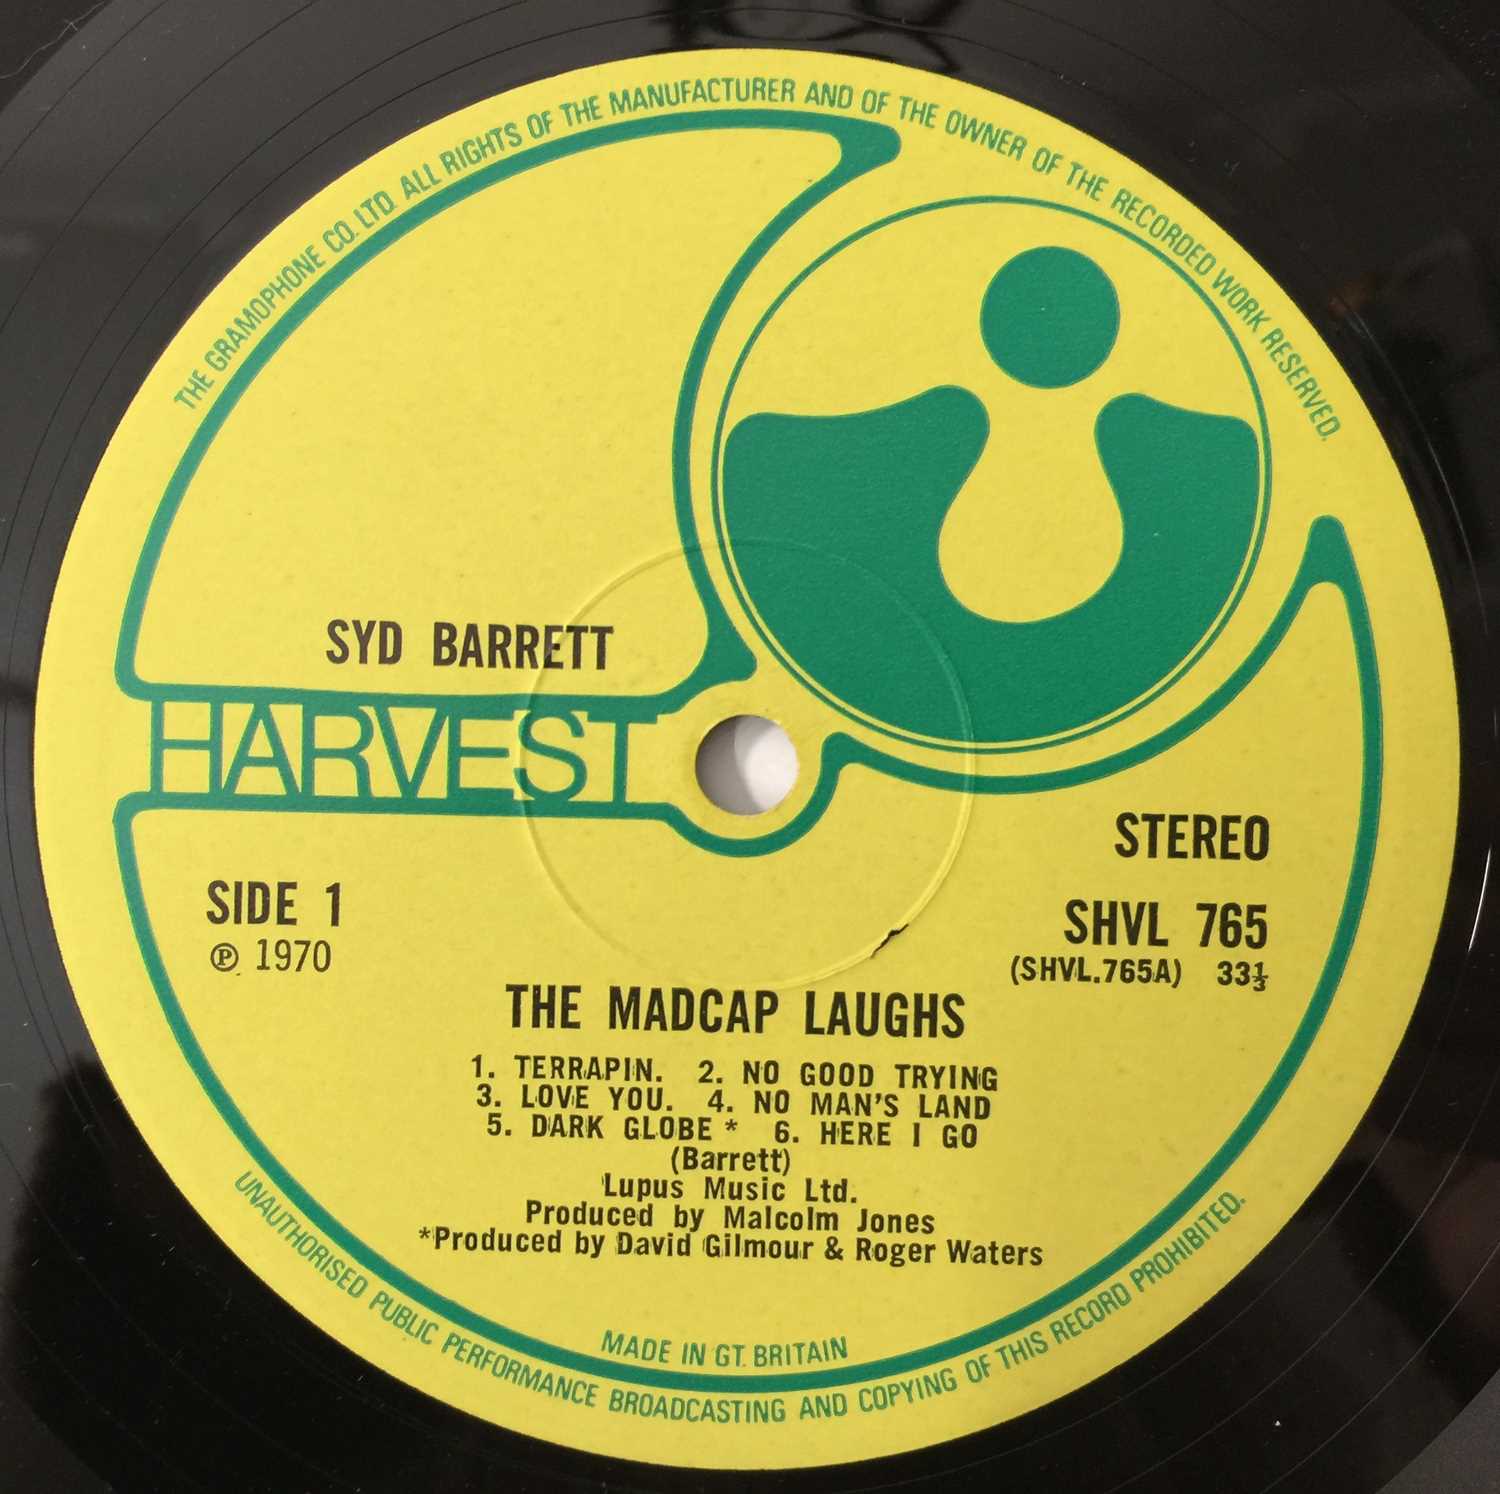 SYD BARRETT - THE MADCAP LAUGHS LP (ORIGINAL UK COPY - HARVEST SHVL 765) - Image 4 of 8